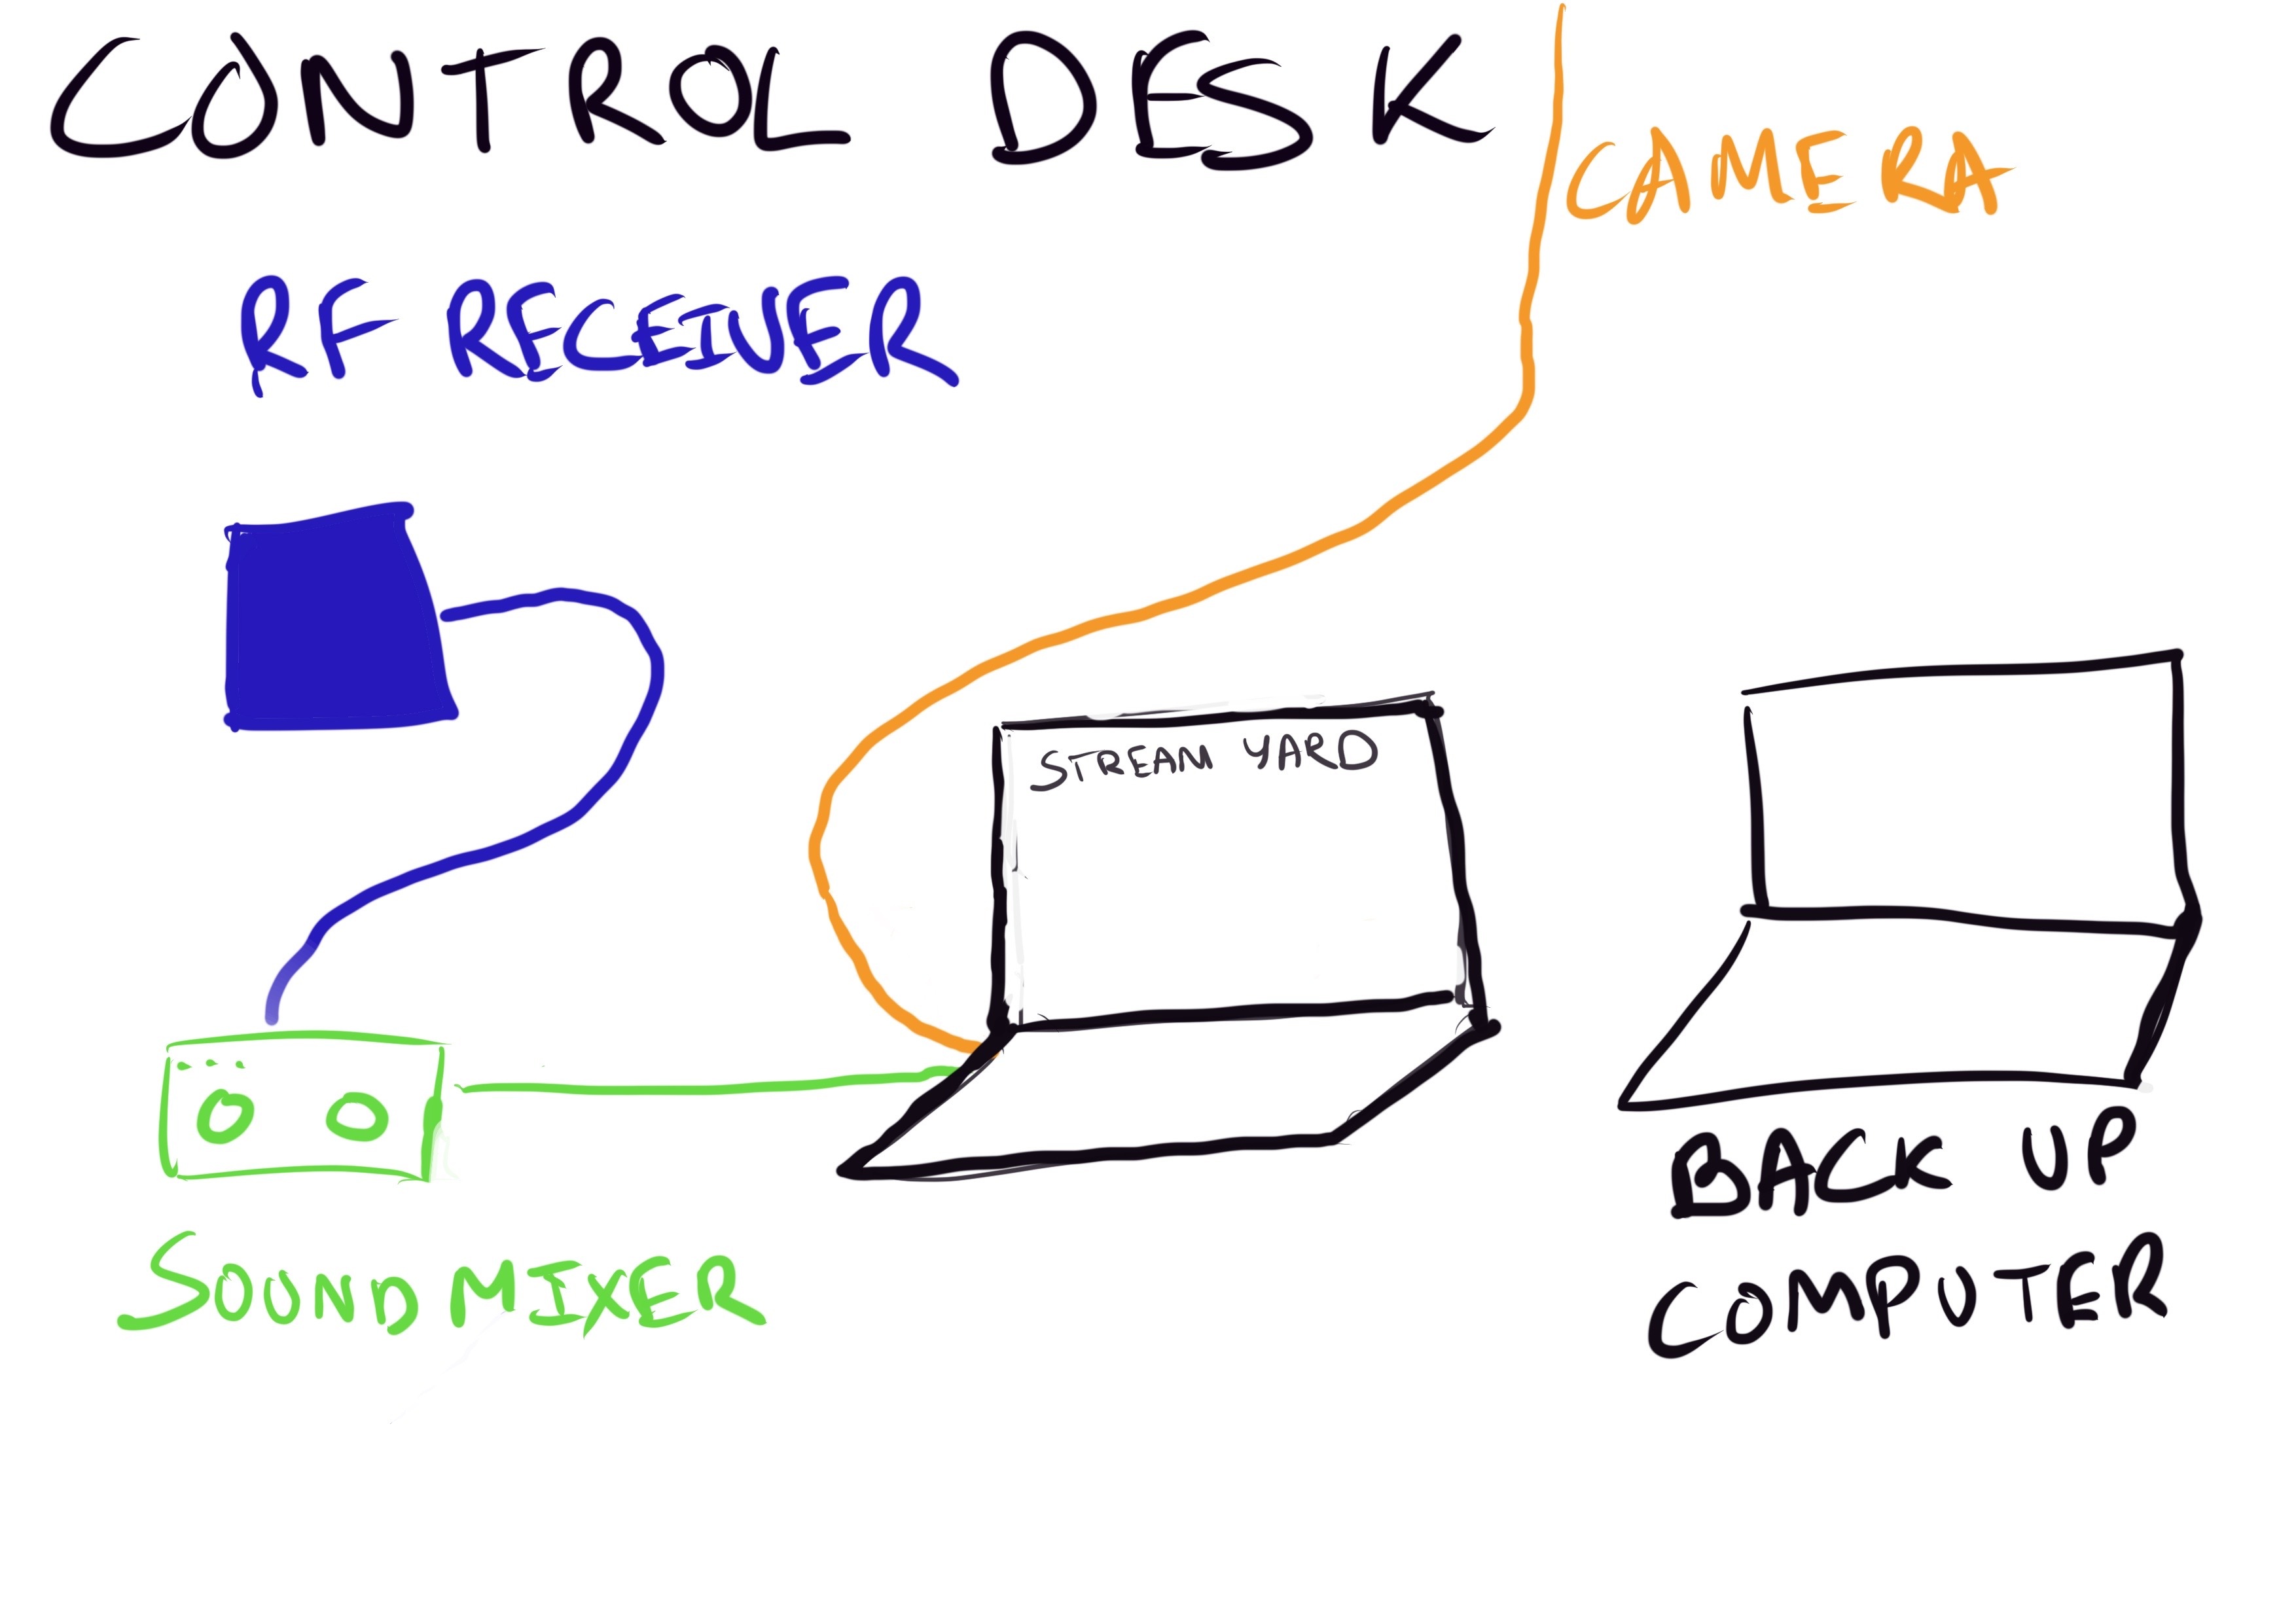 Control desk setup